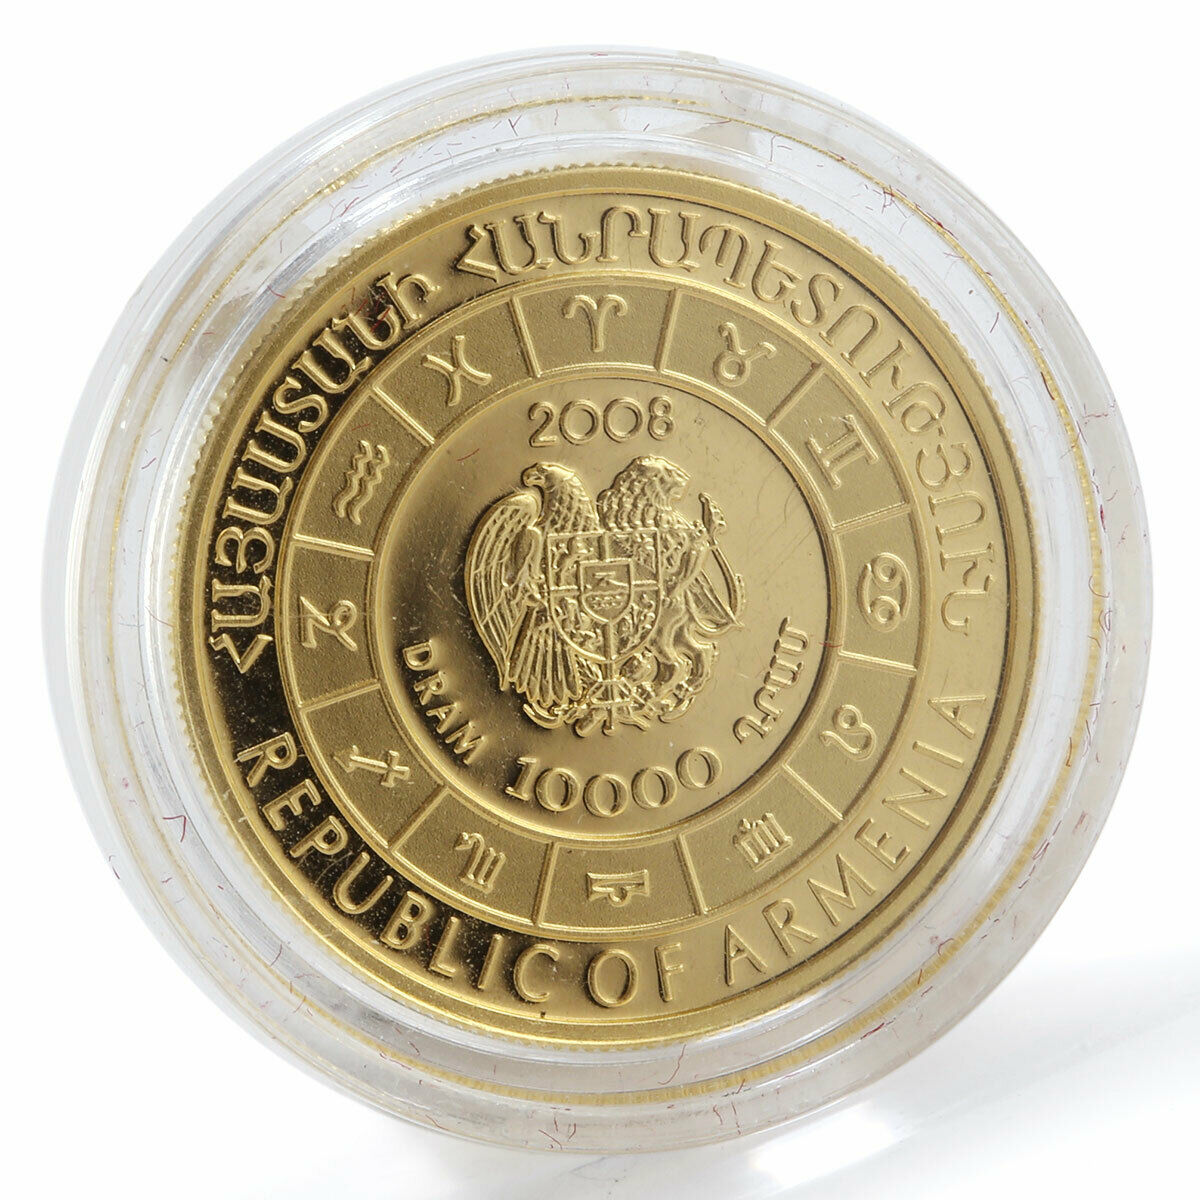 Armenia 10000 dram Zodiac Sagittarius proof gold coin 2008